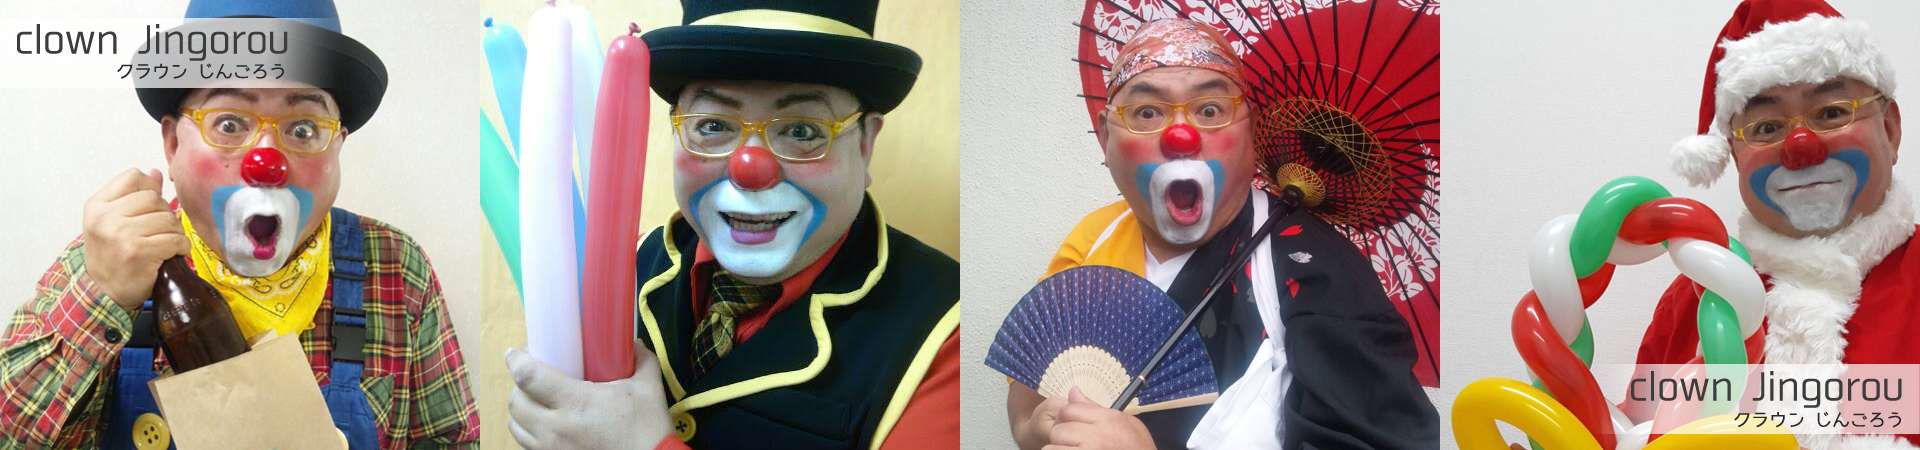 clown-jingorou-main